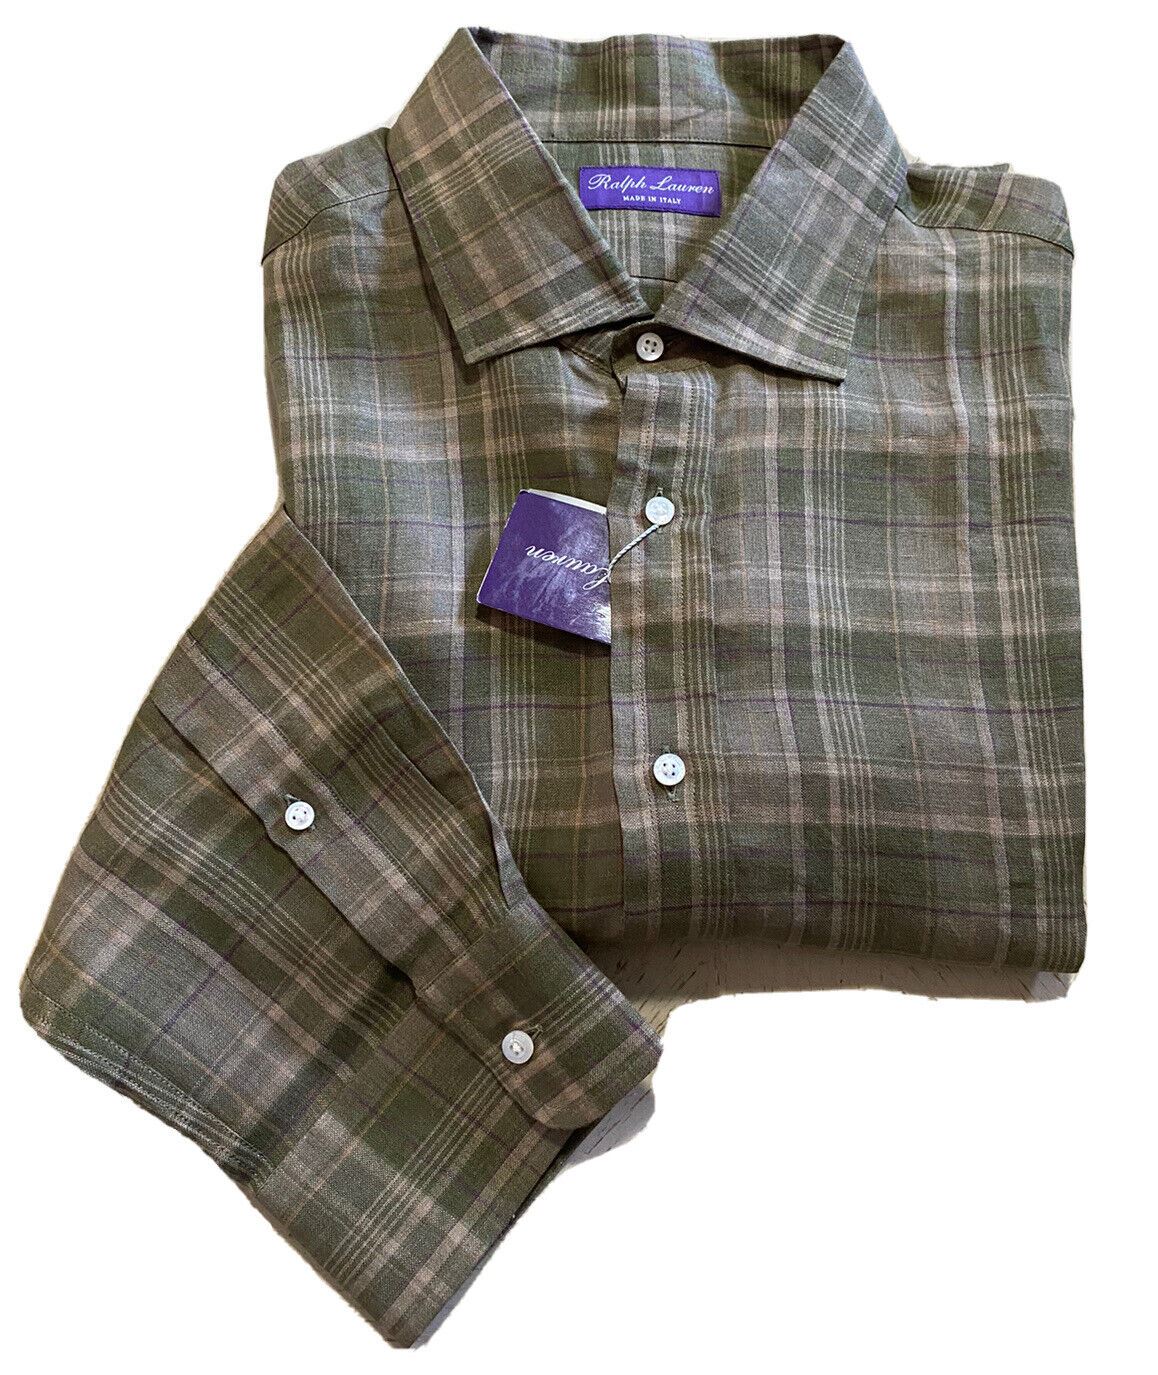 Neu mit Etikett: 495 $ Ralph Lauren Purple Label Herren Leinenhemd Farm Olive XXL Italien